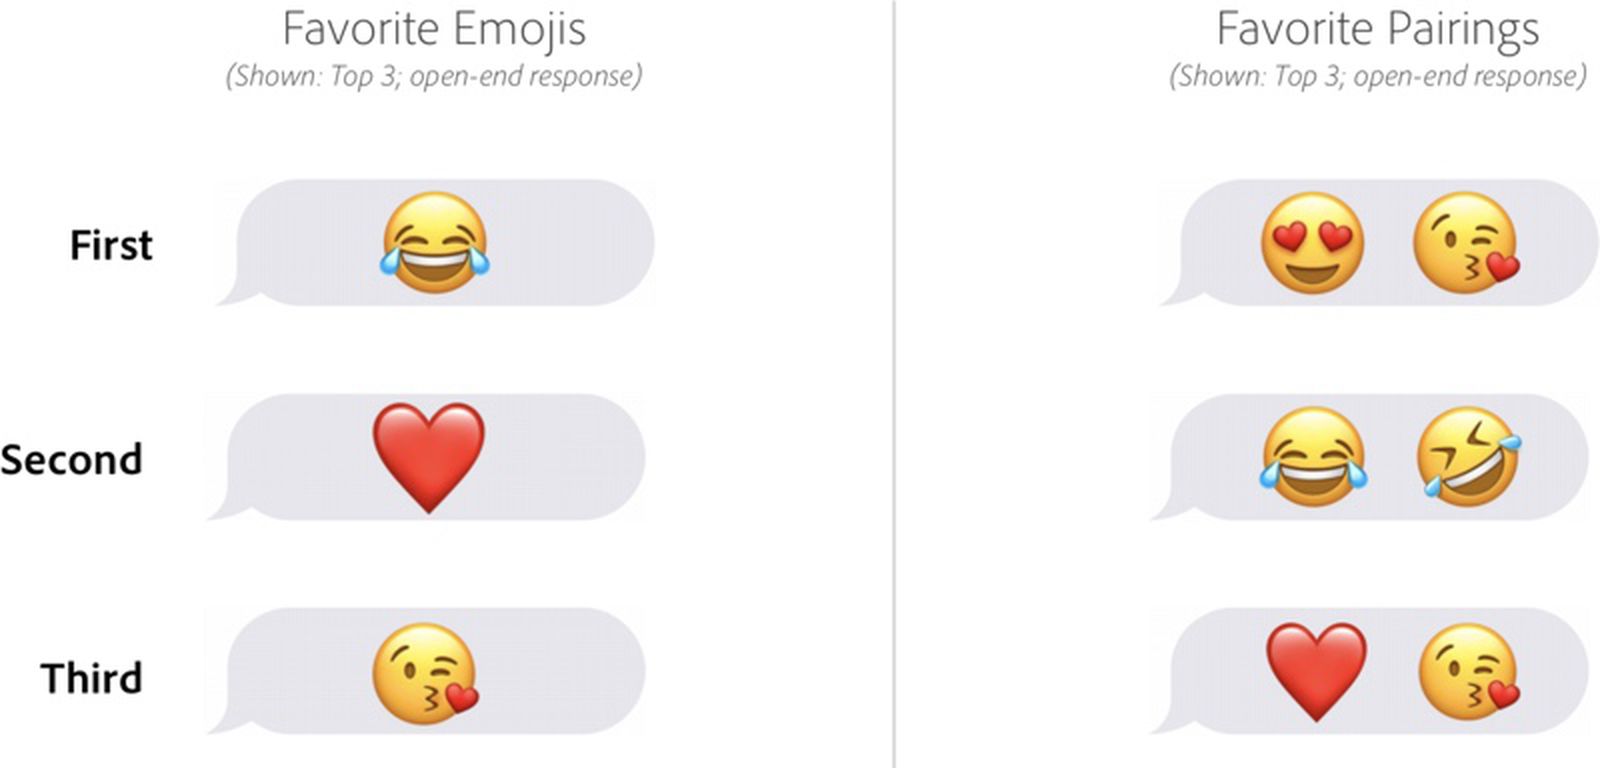 I <3 Emojis